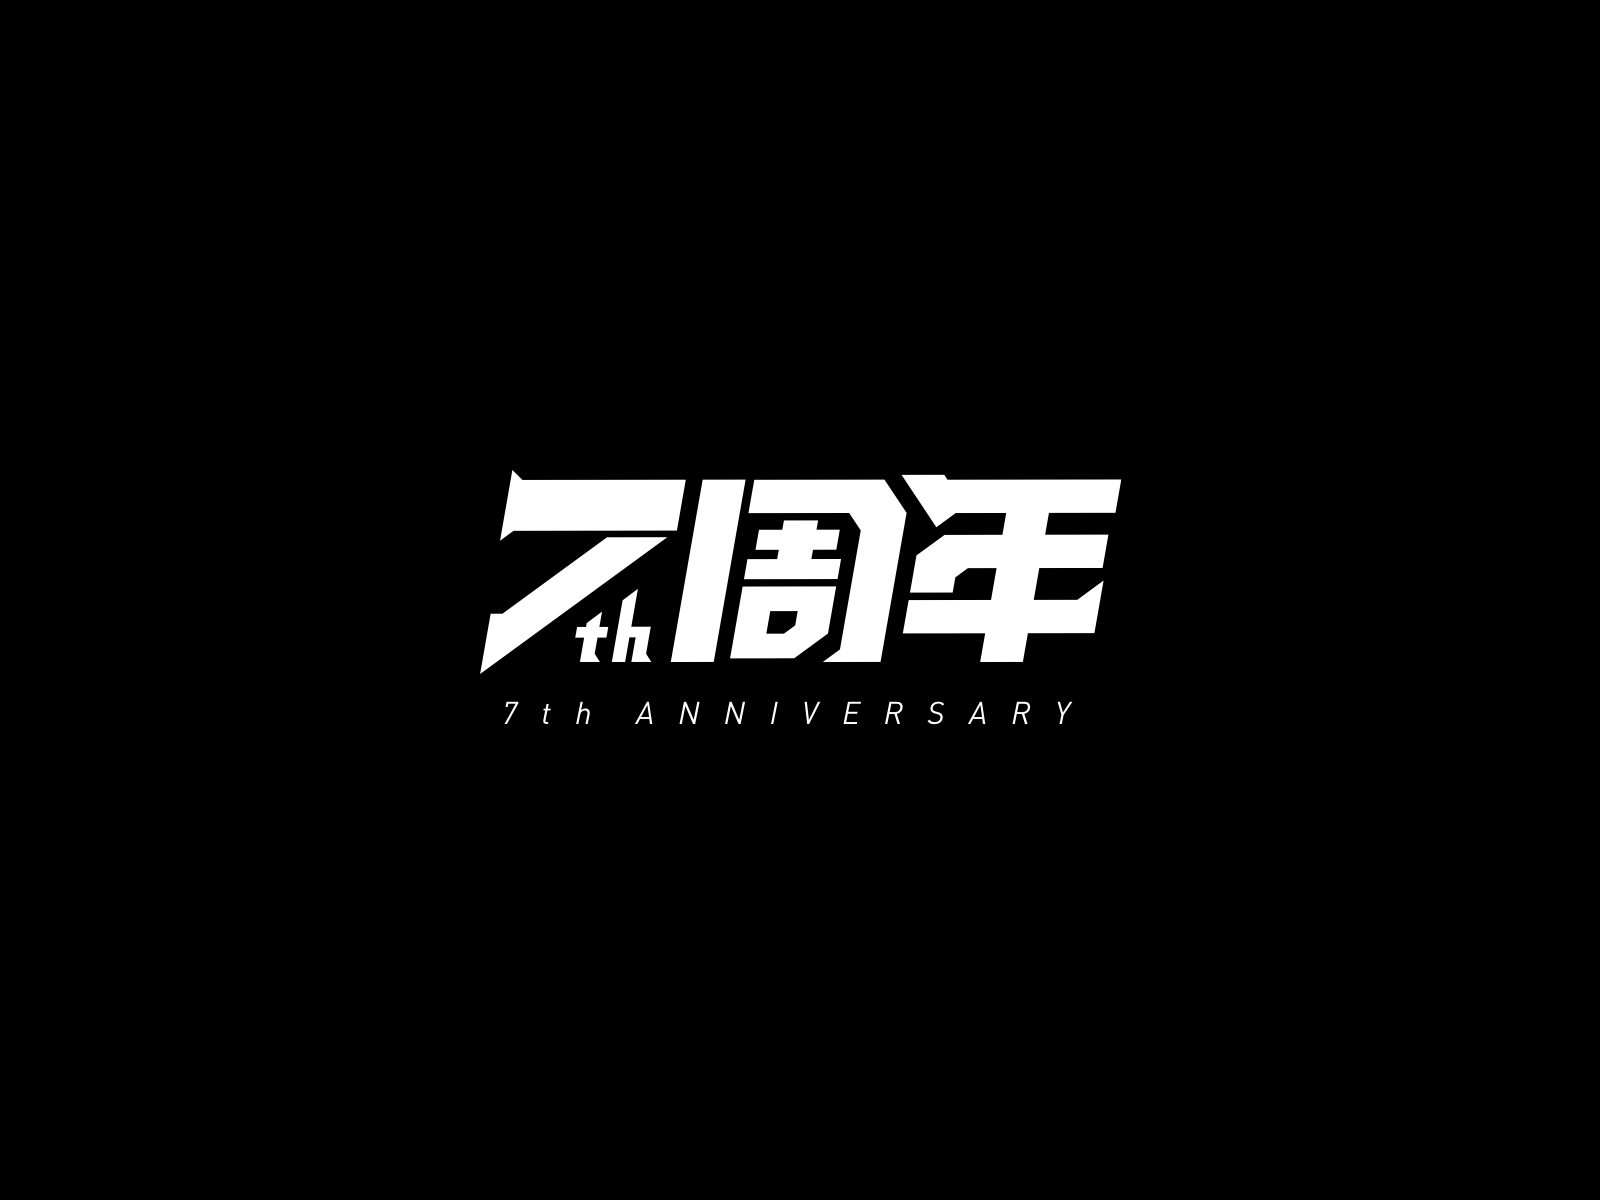 7th anniversary logo